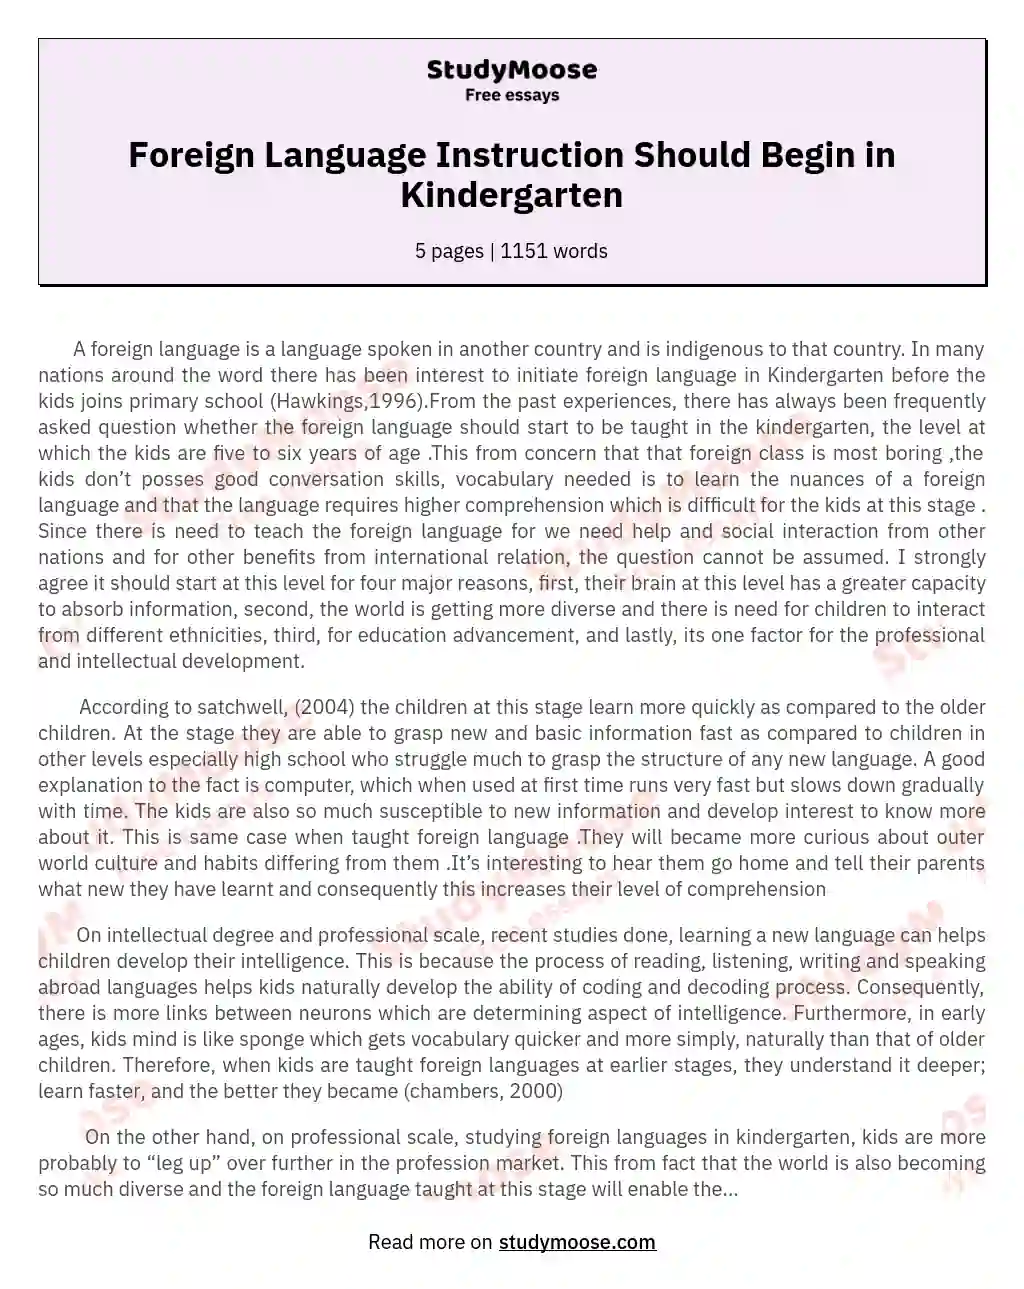 Foreign Language Instruction Should Begin in Kindergarten essay